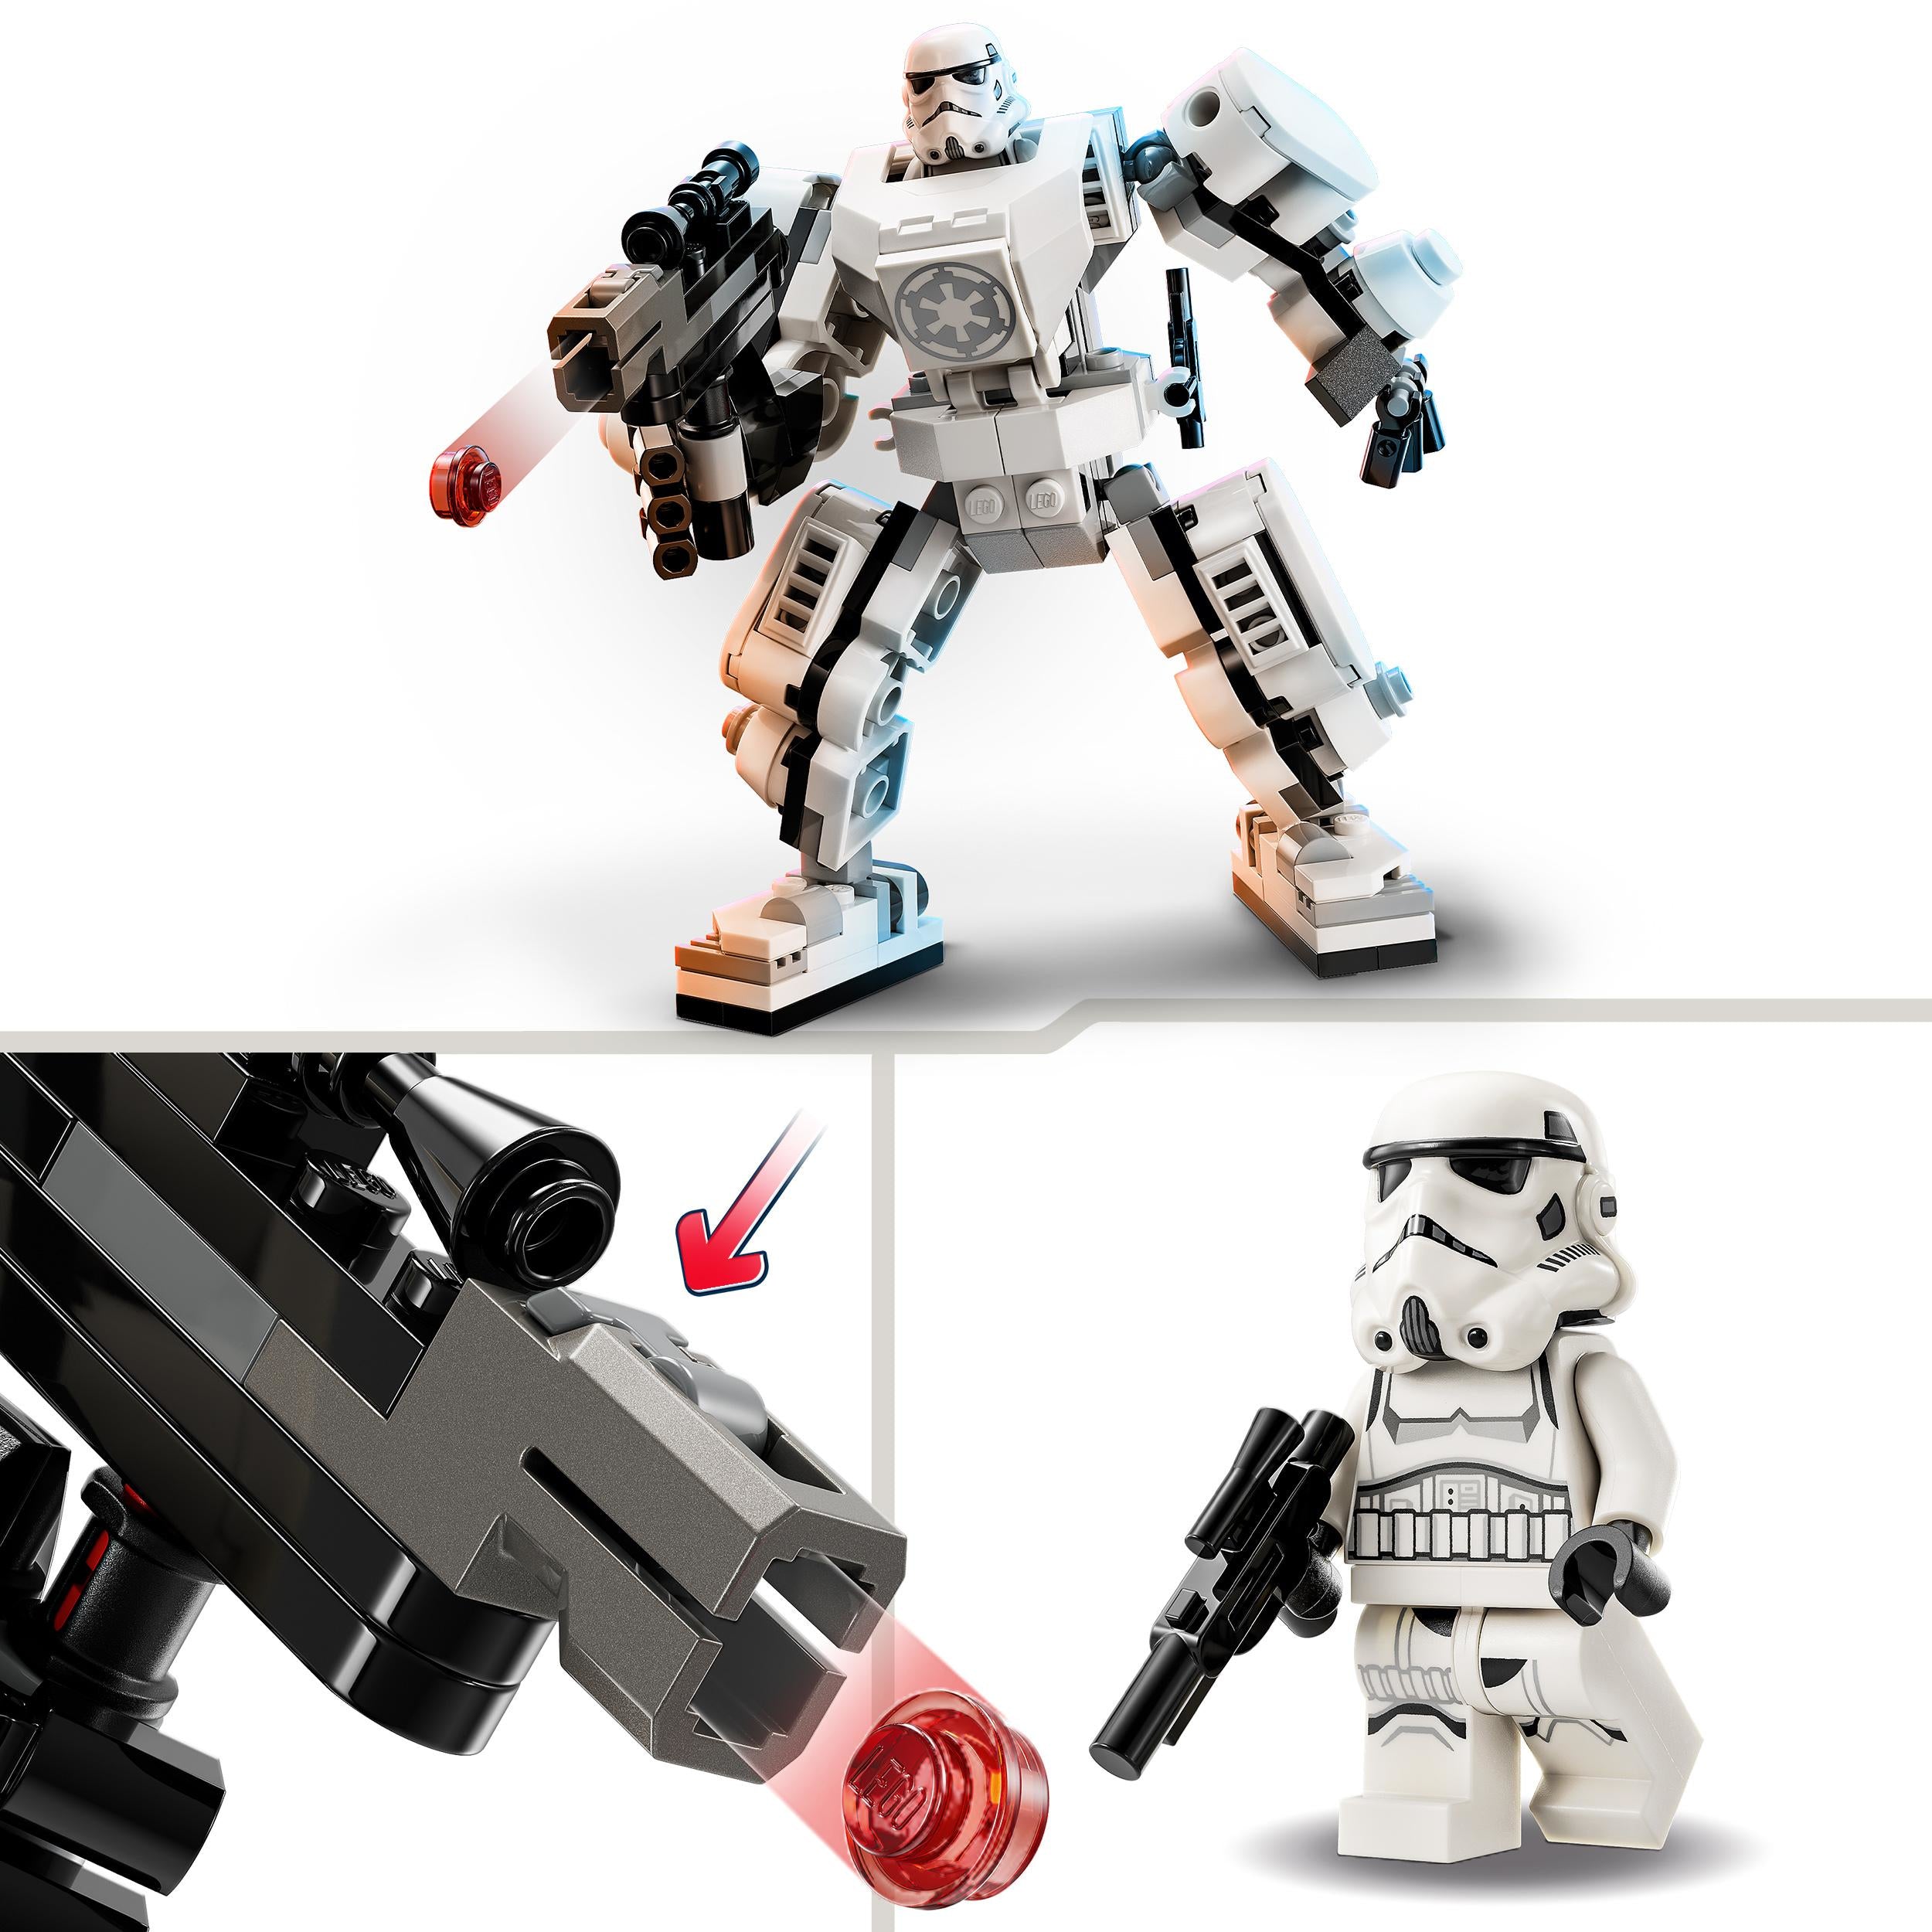 75370 LEGO Star Wars TM Mech di Stormtrooper™